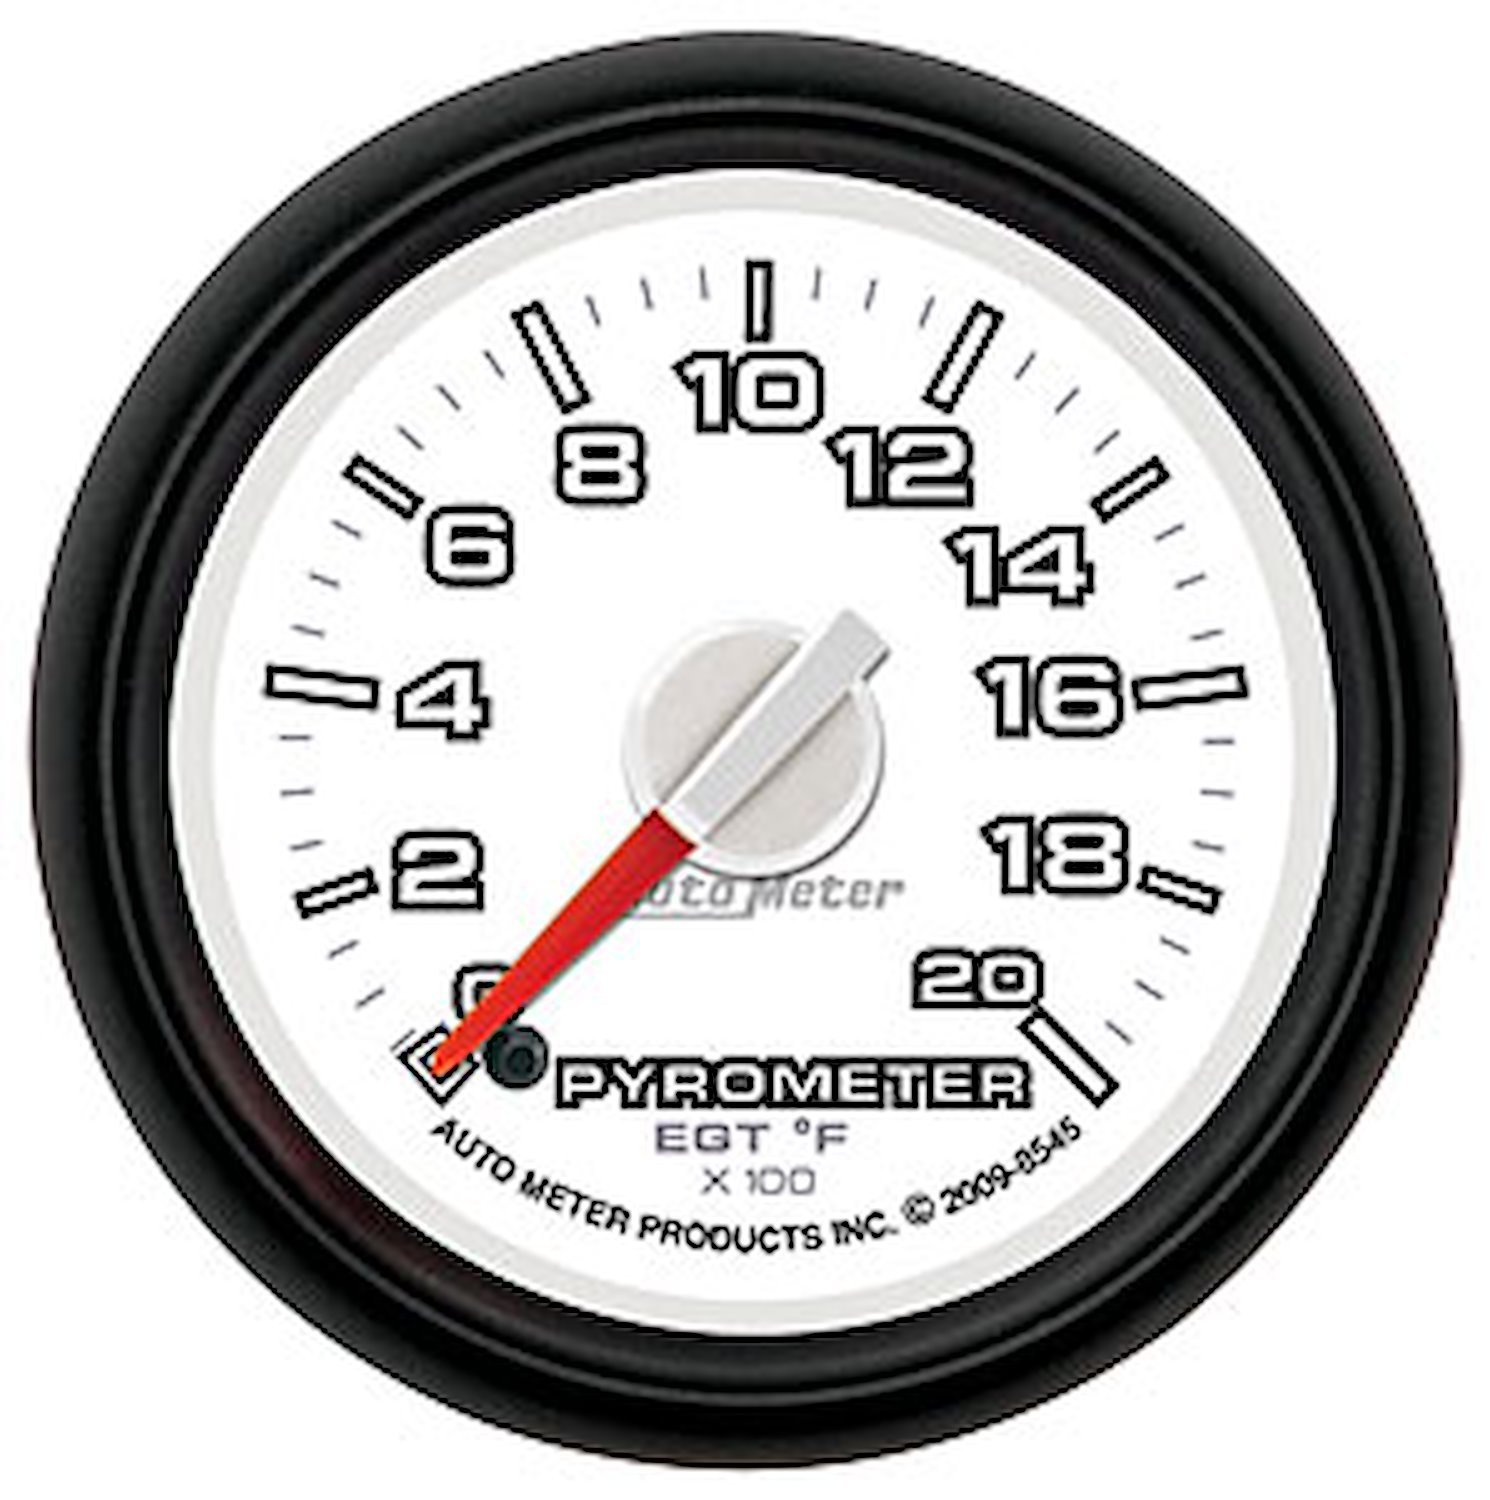 Gen 3 Dodge Factory Match Pyrometer 2-1/16" Electrical